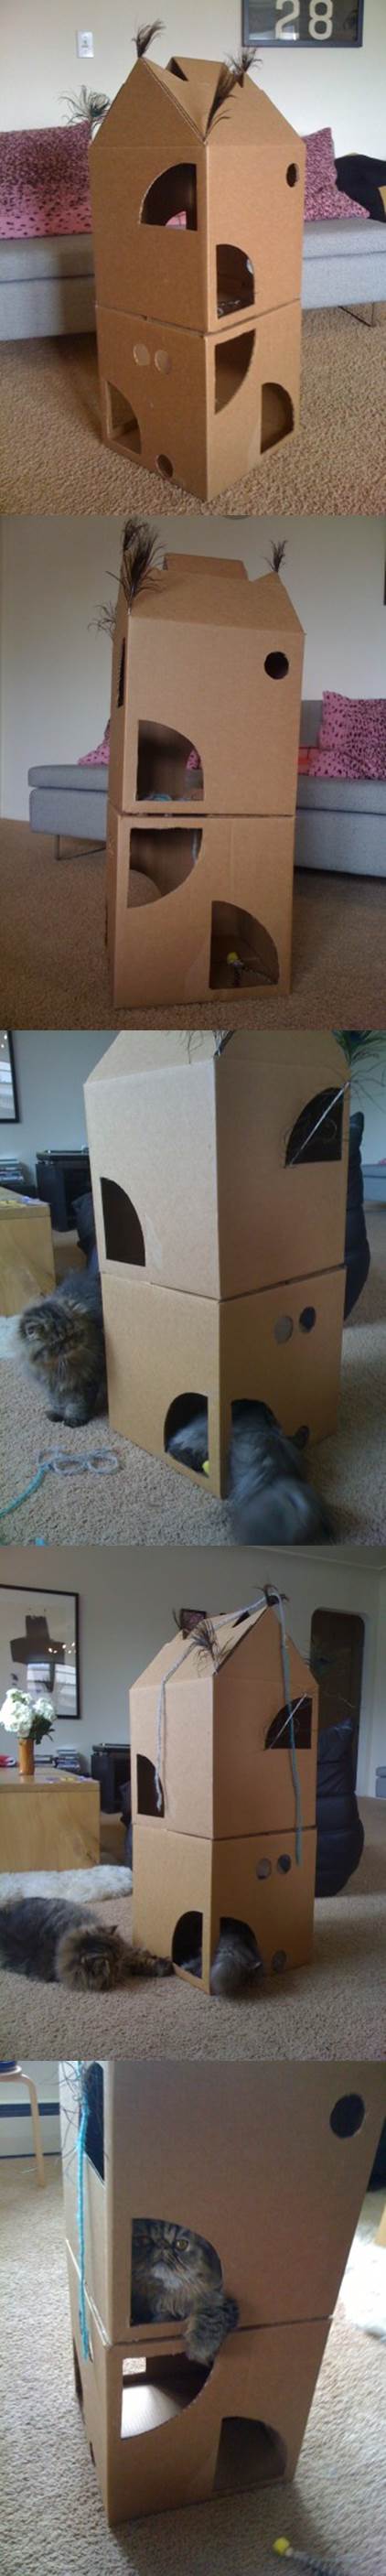 DIY Two-Story Cardboard Cat Climber 2